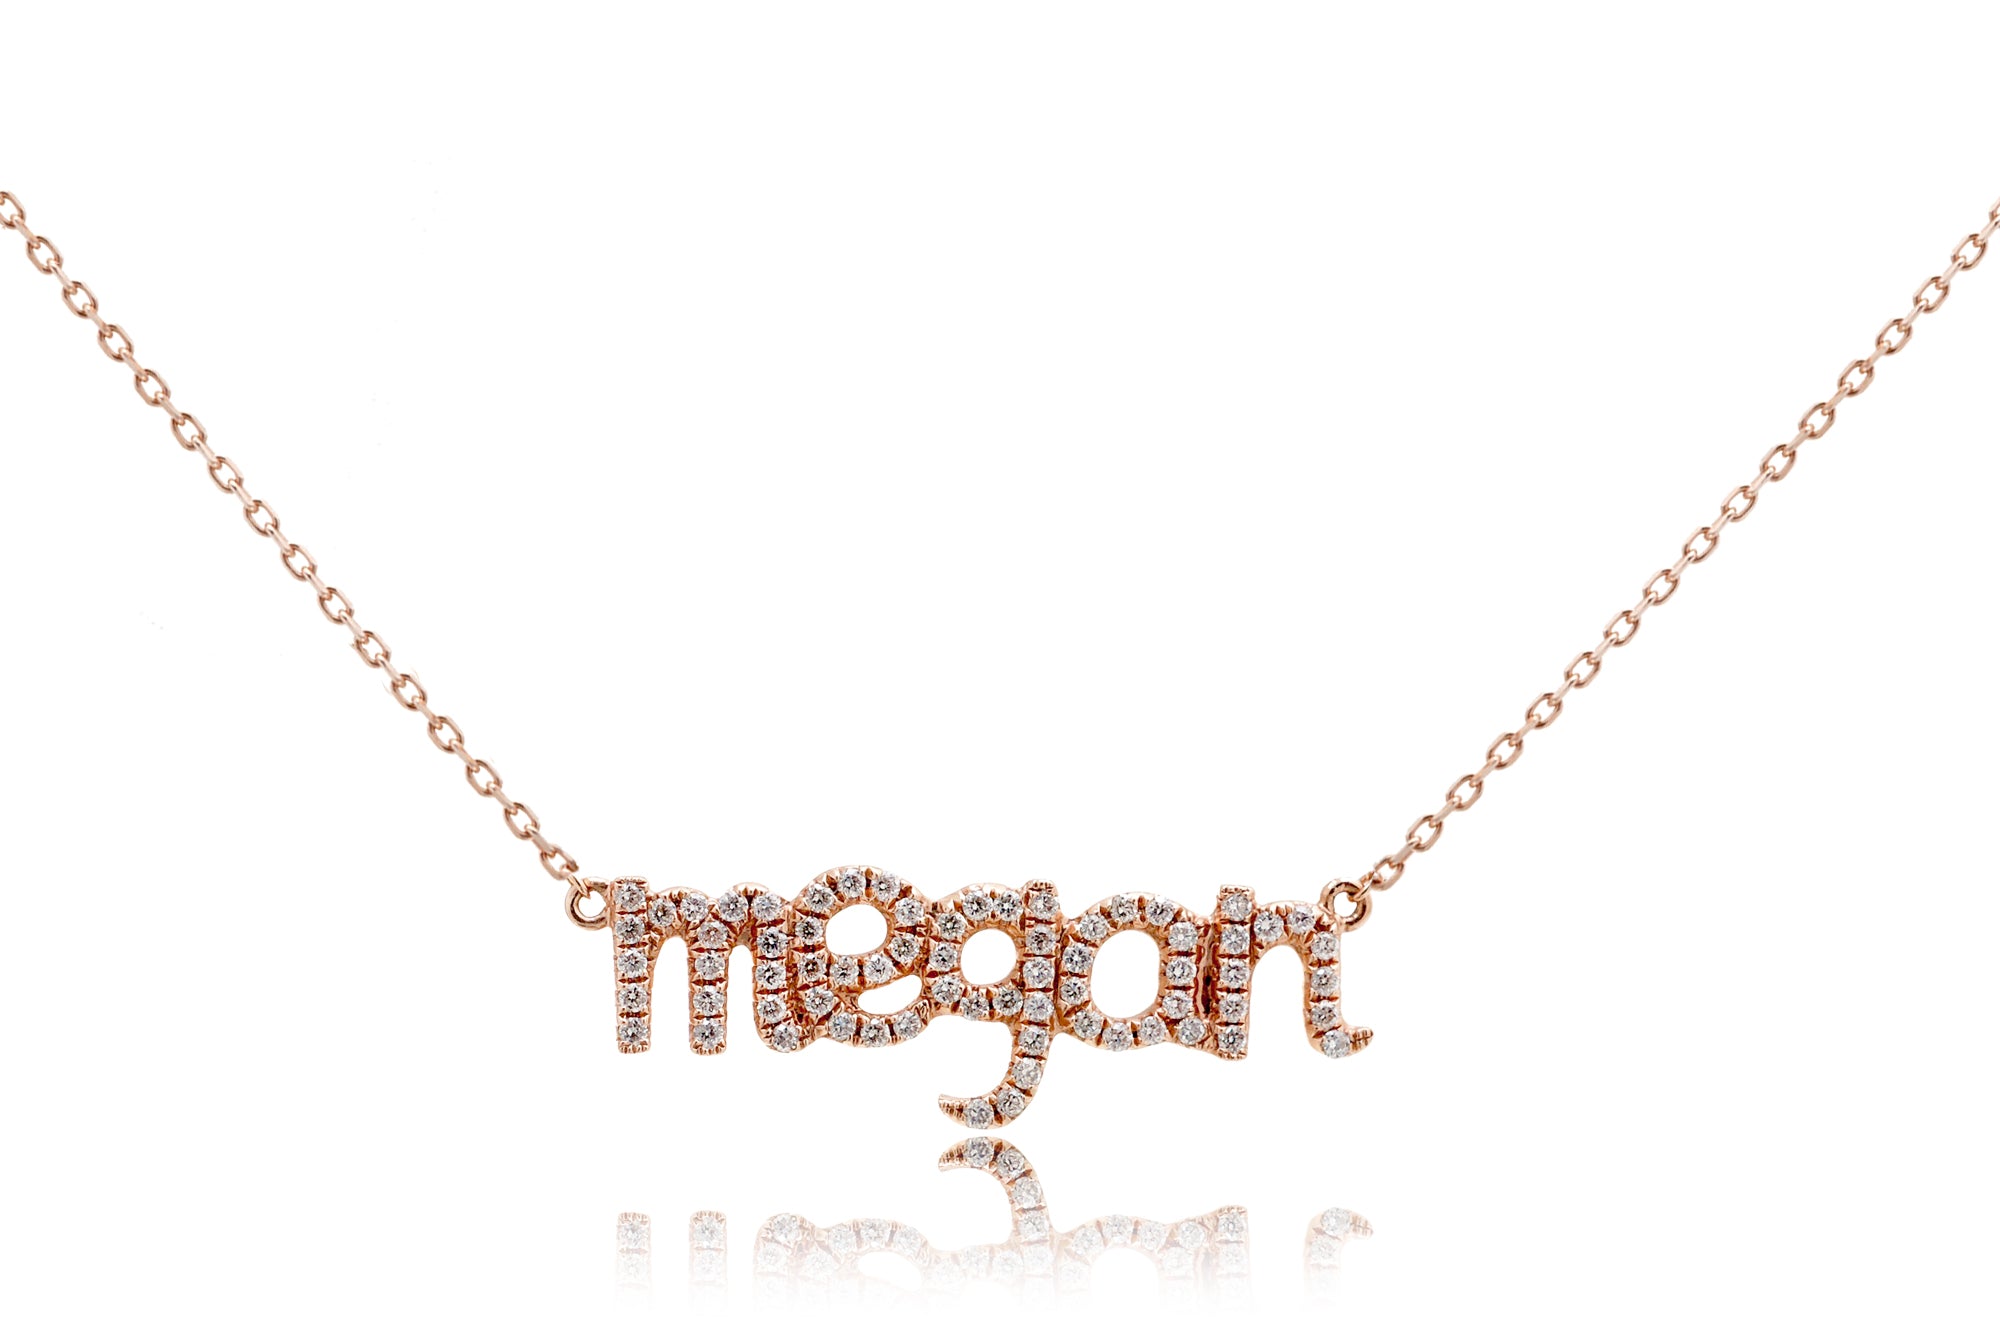 The Initial Megan Pave Pendant